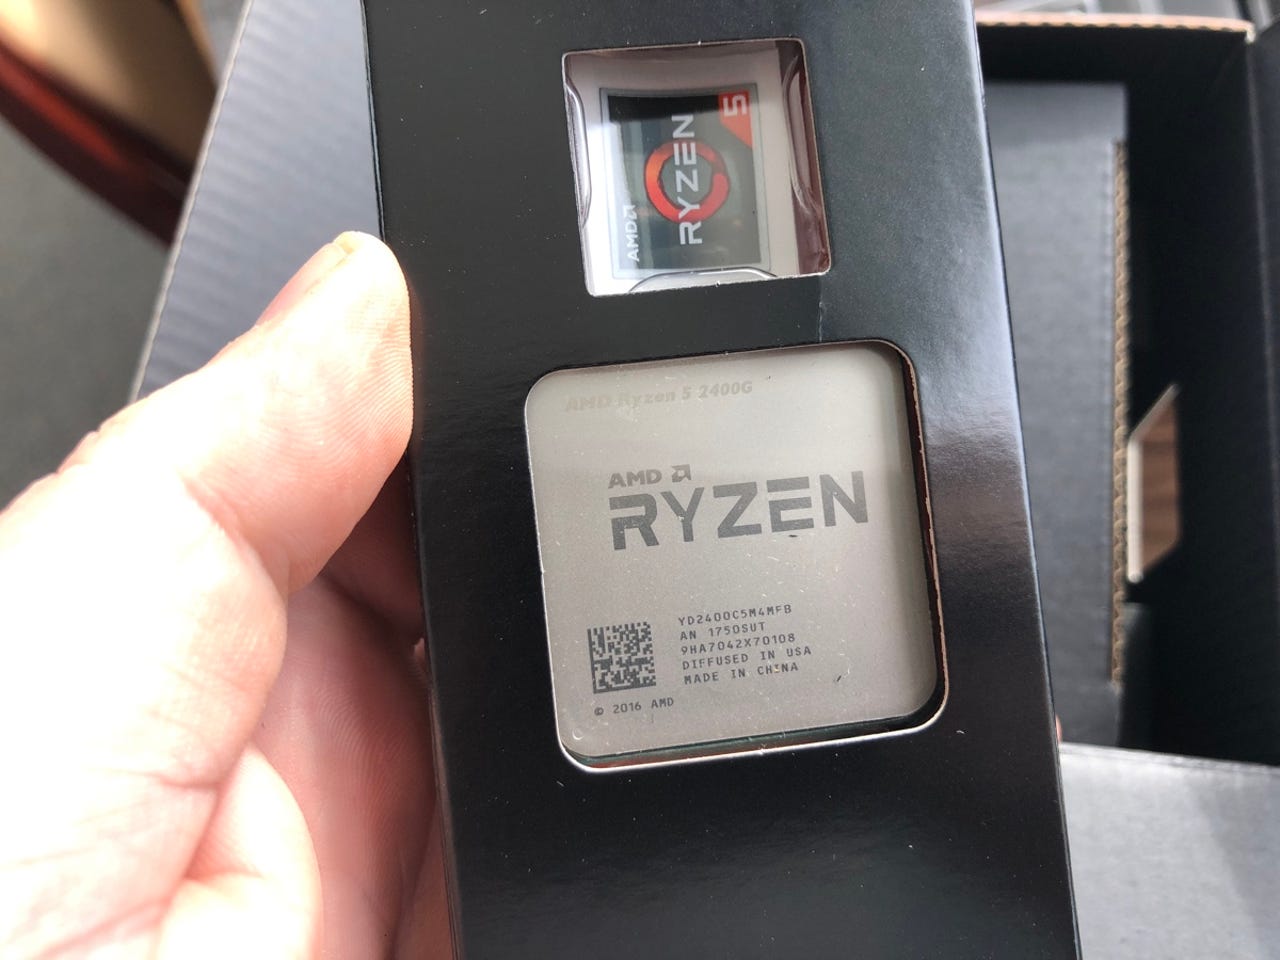 Quad-core Ryzen 5 2400 G